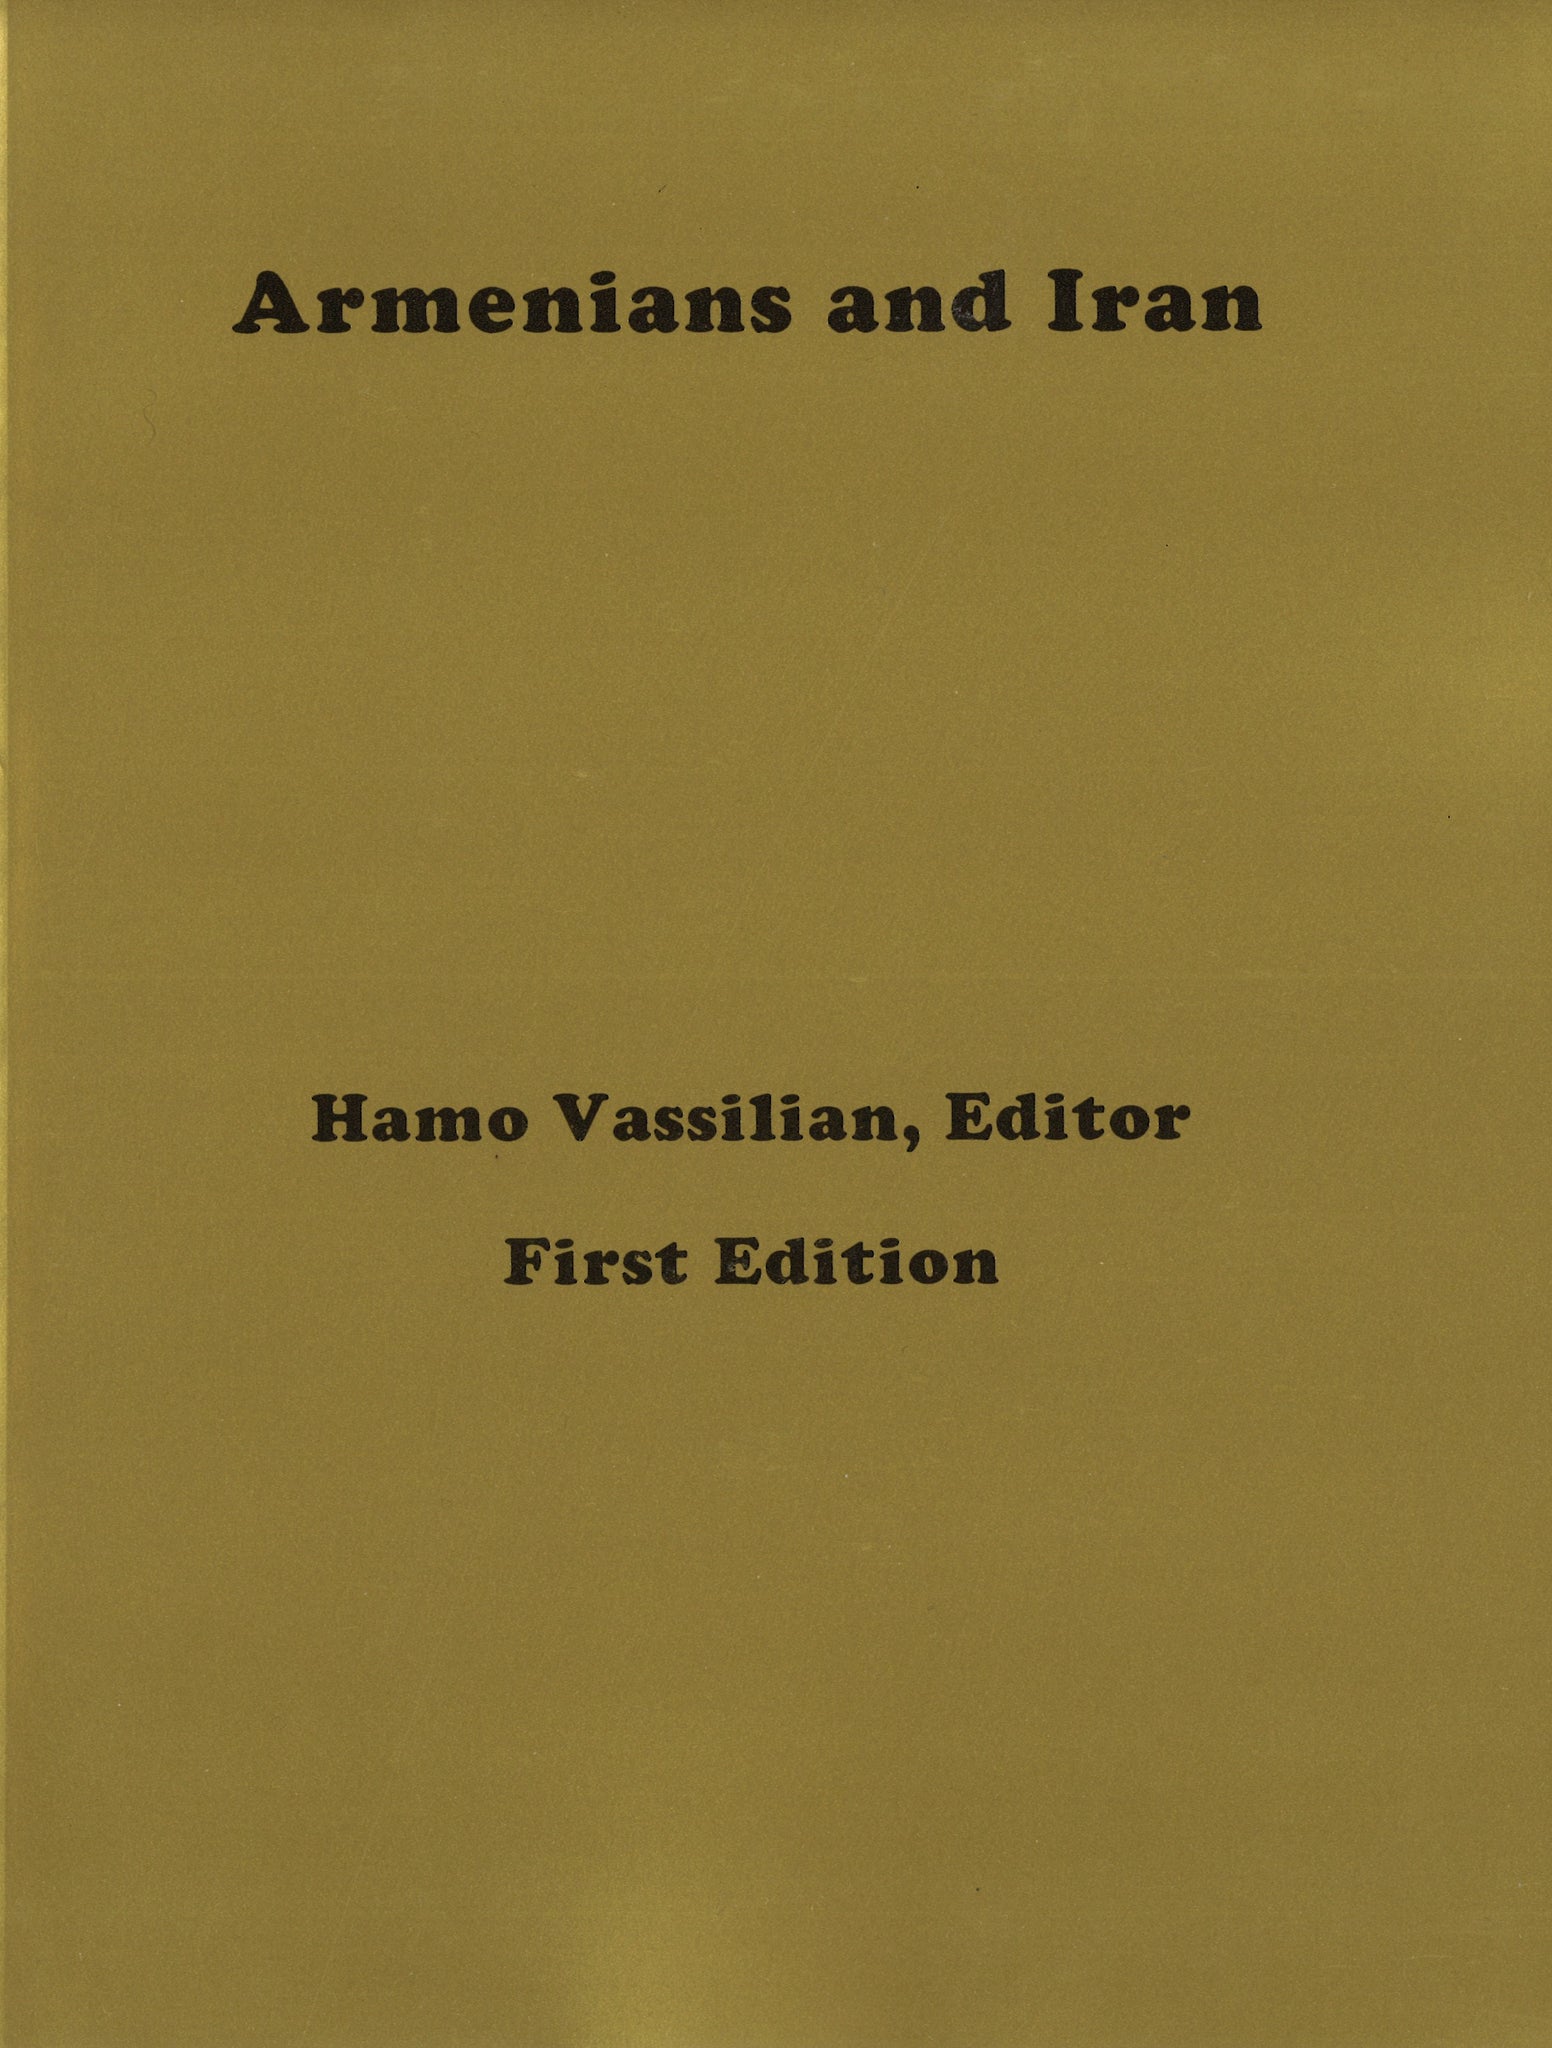 ARMENIANS AND IRAN